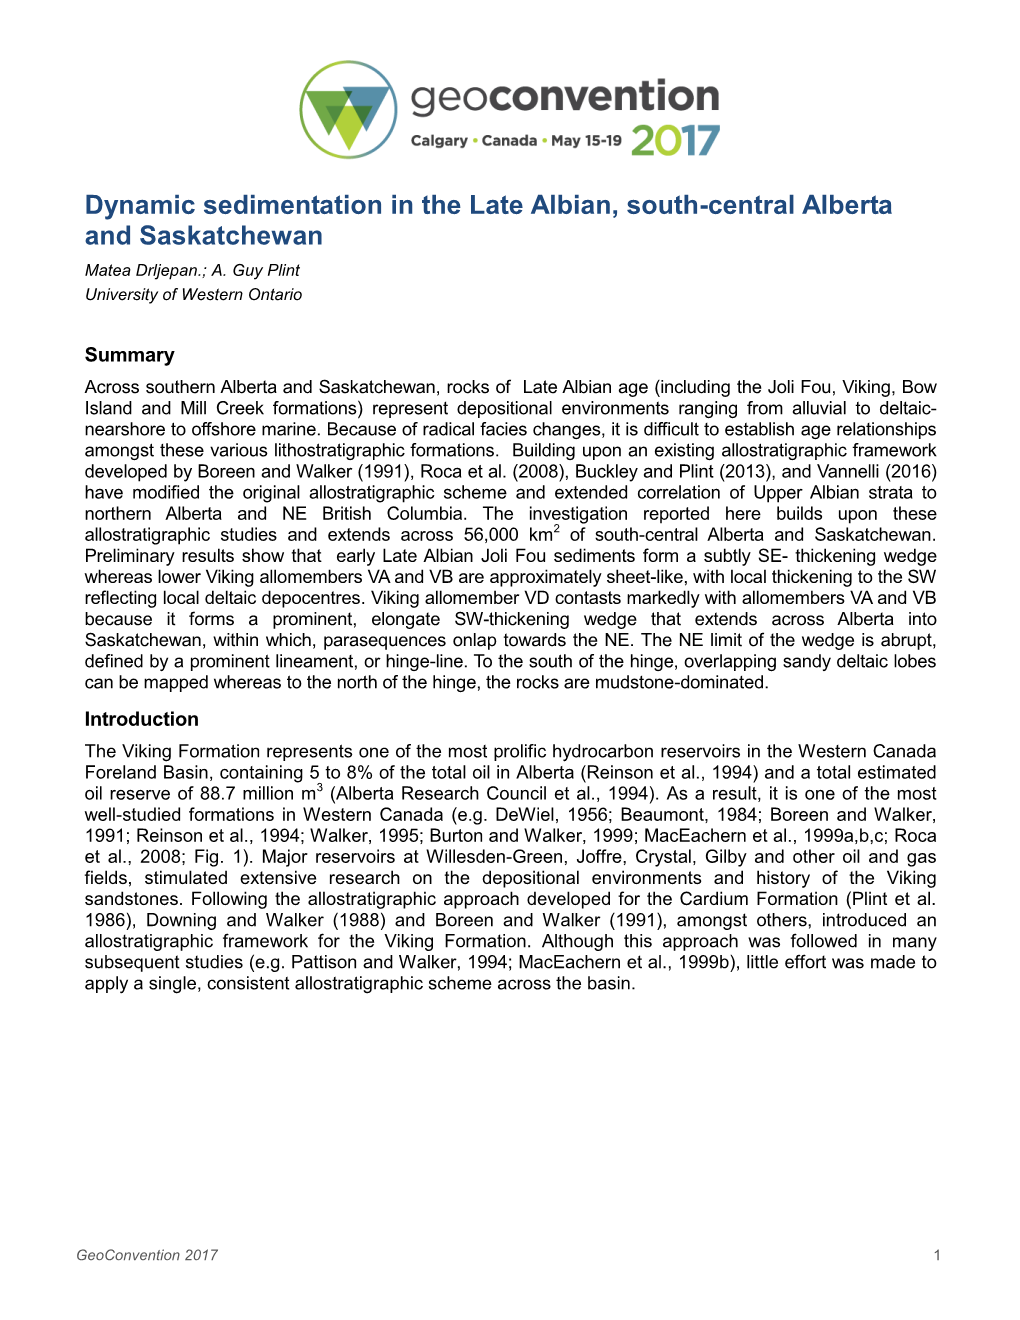 Dynamic Sedimentation in the Late Albian, South-Central Alberta and Saskatchewan Matea Drljepan.; A